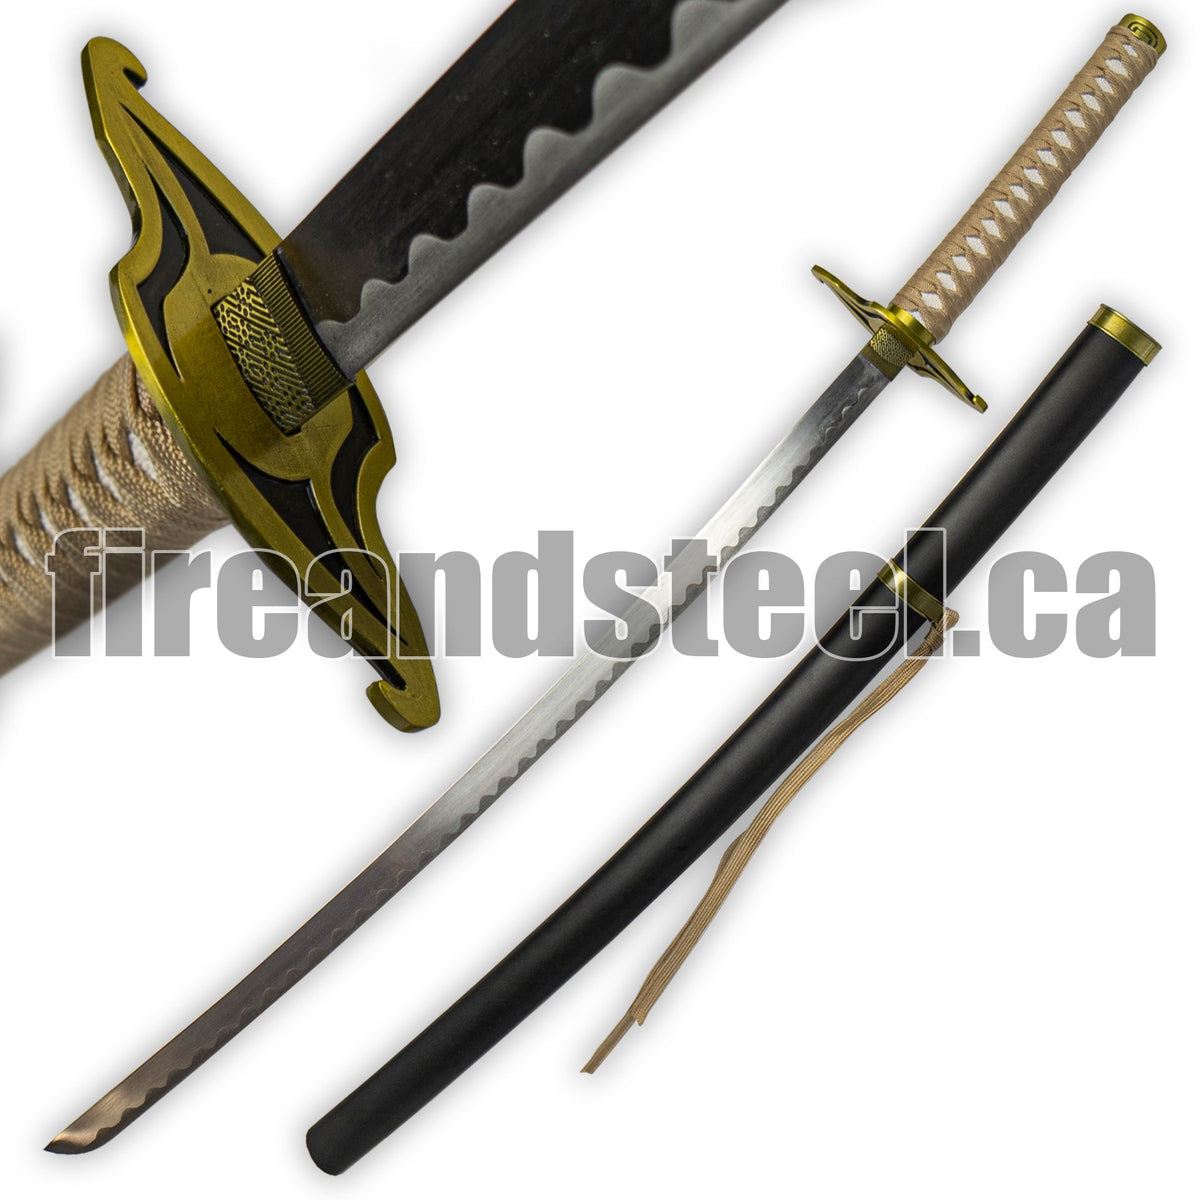 bleach espada 3 sword